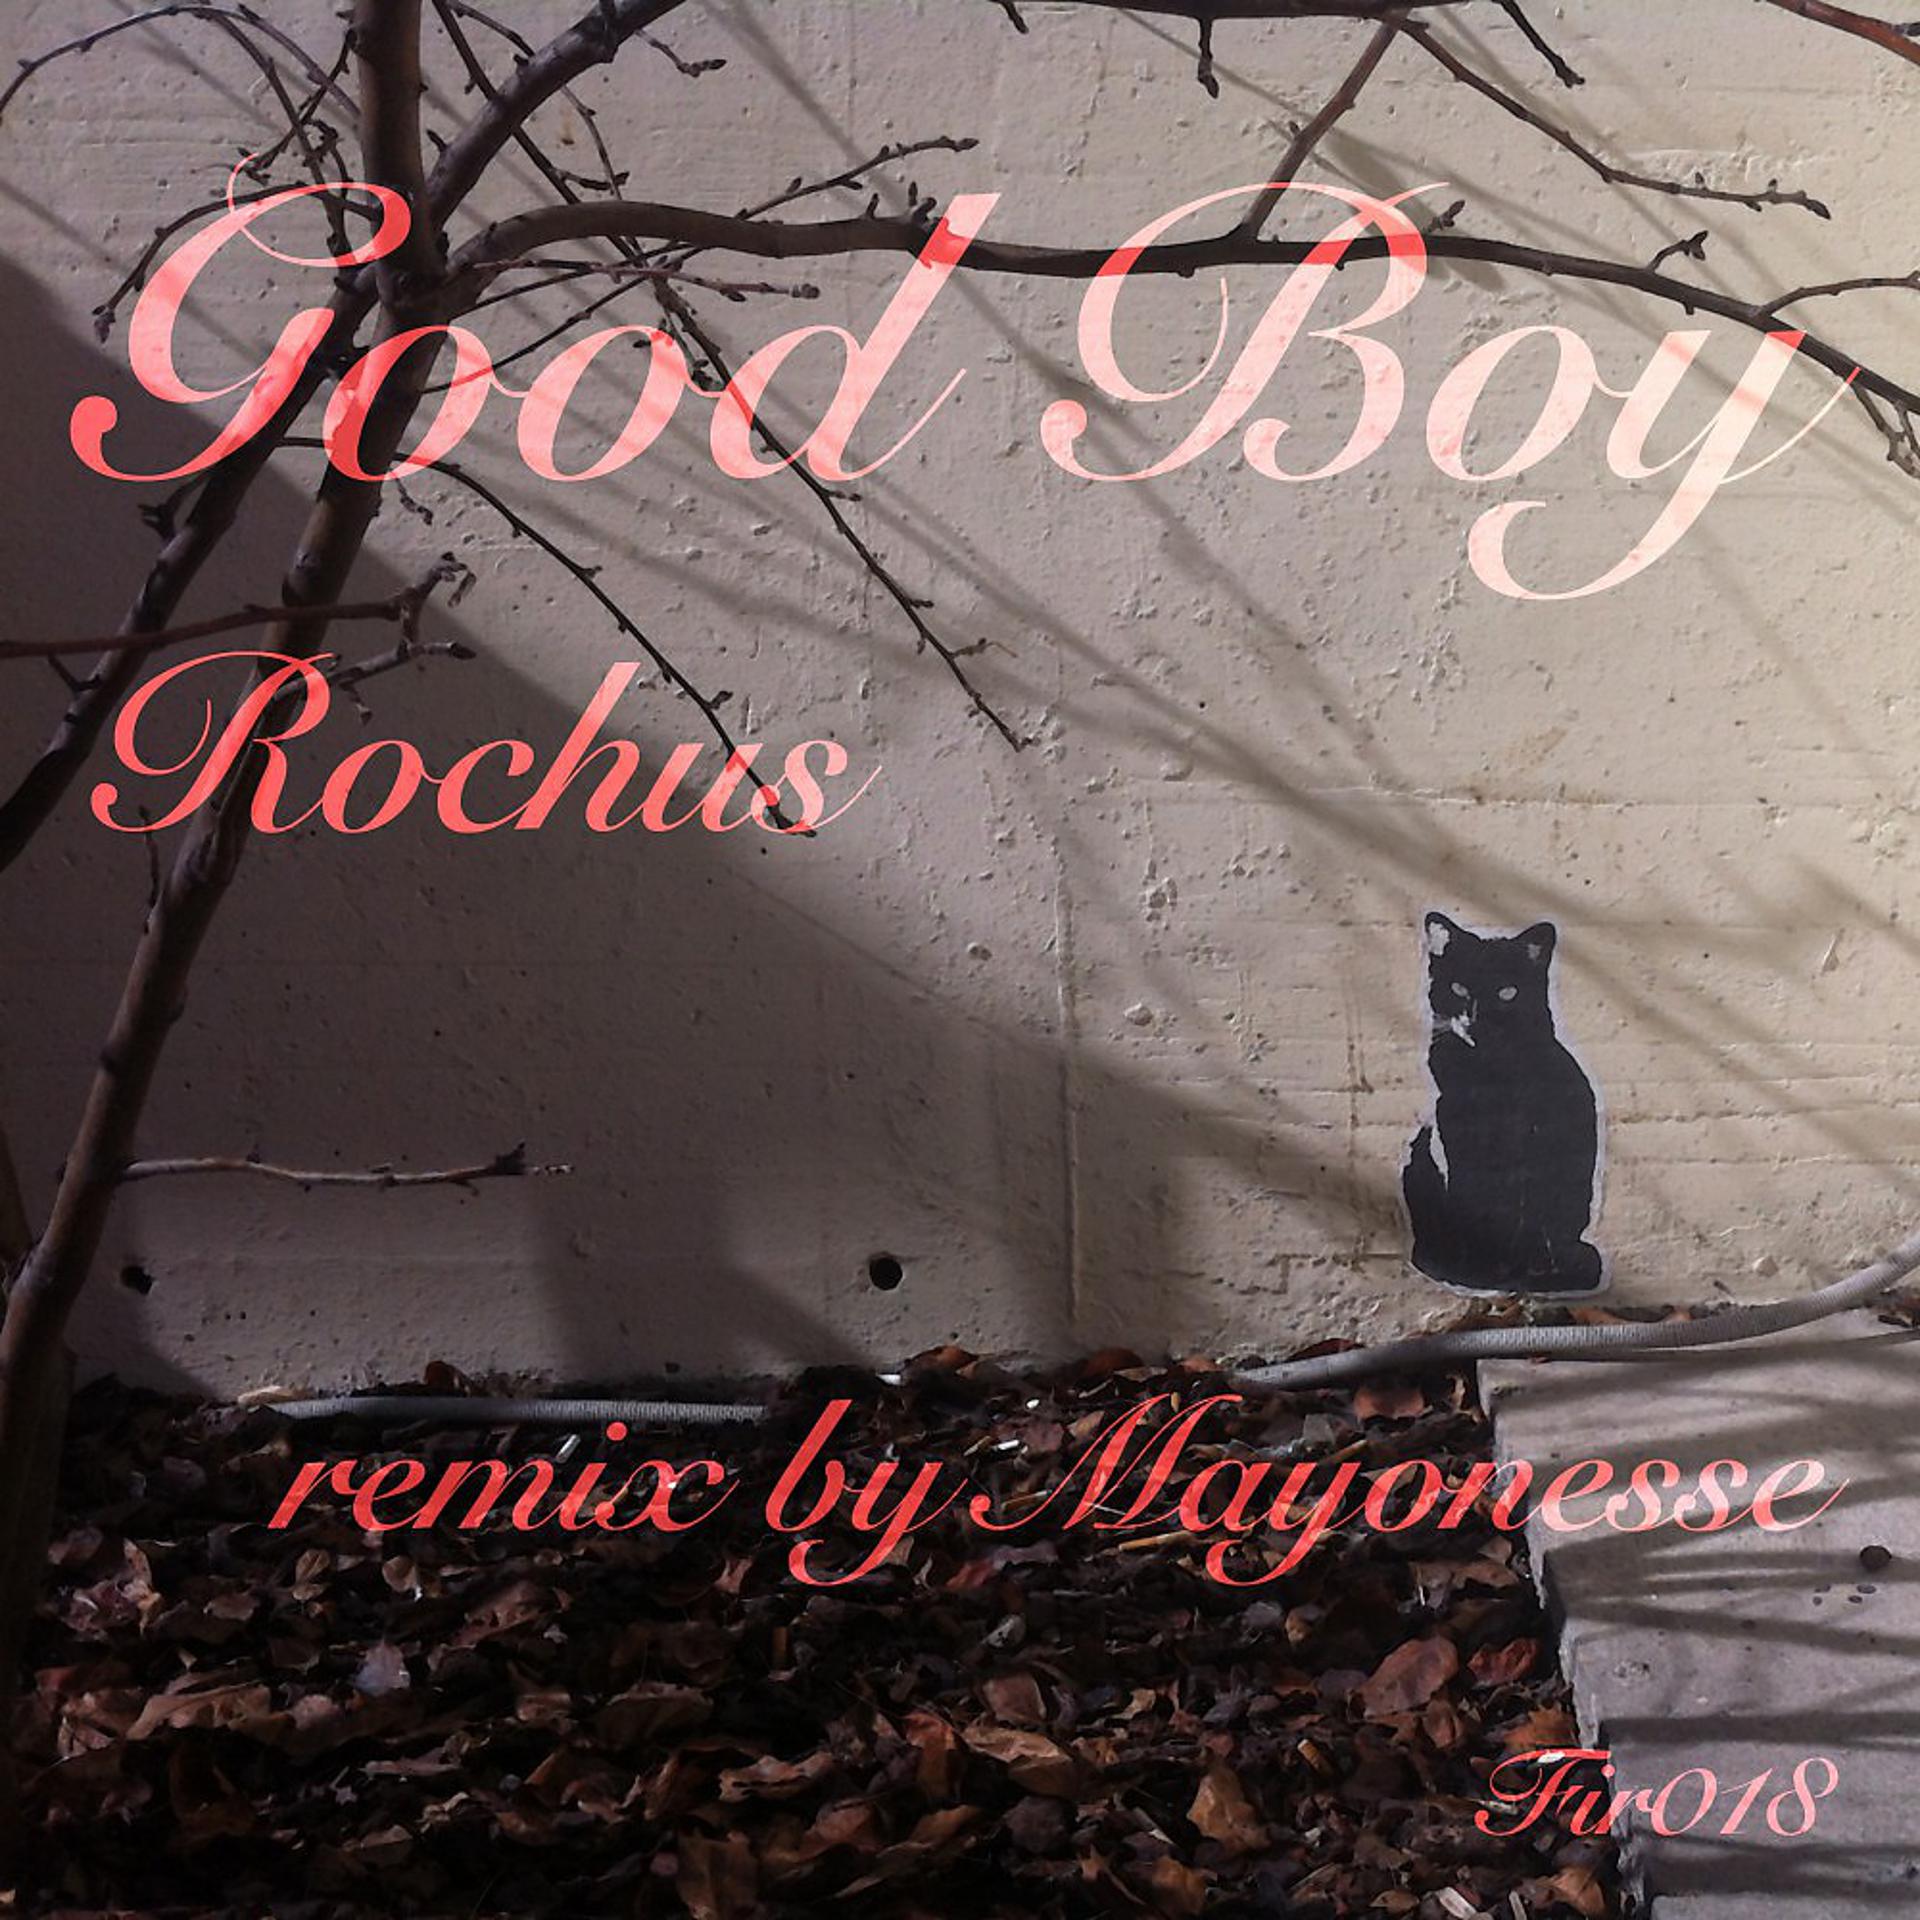 Постер альбома Good Boy